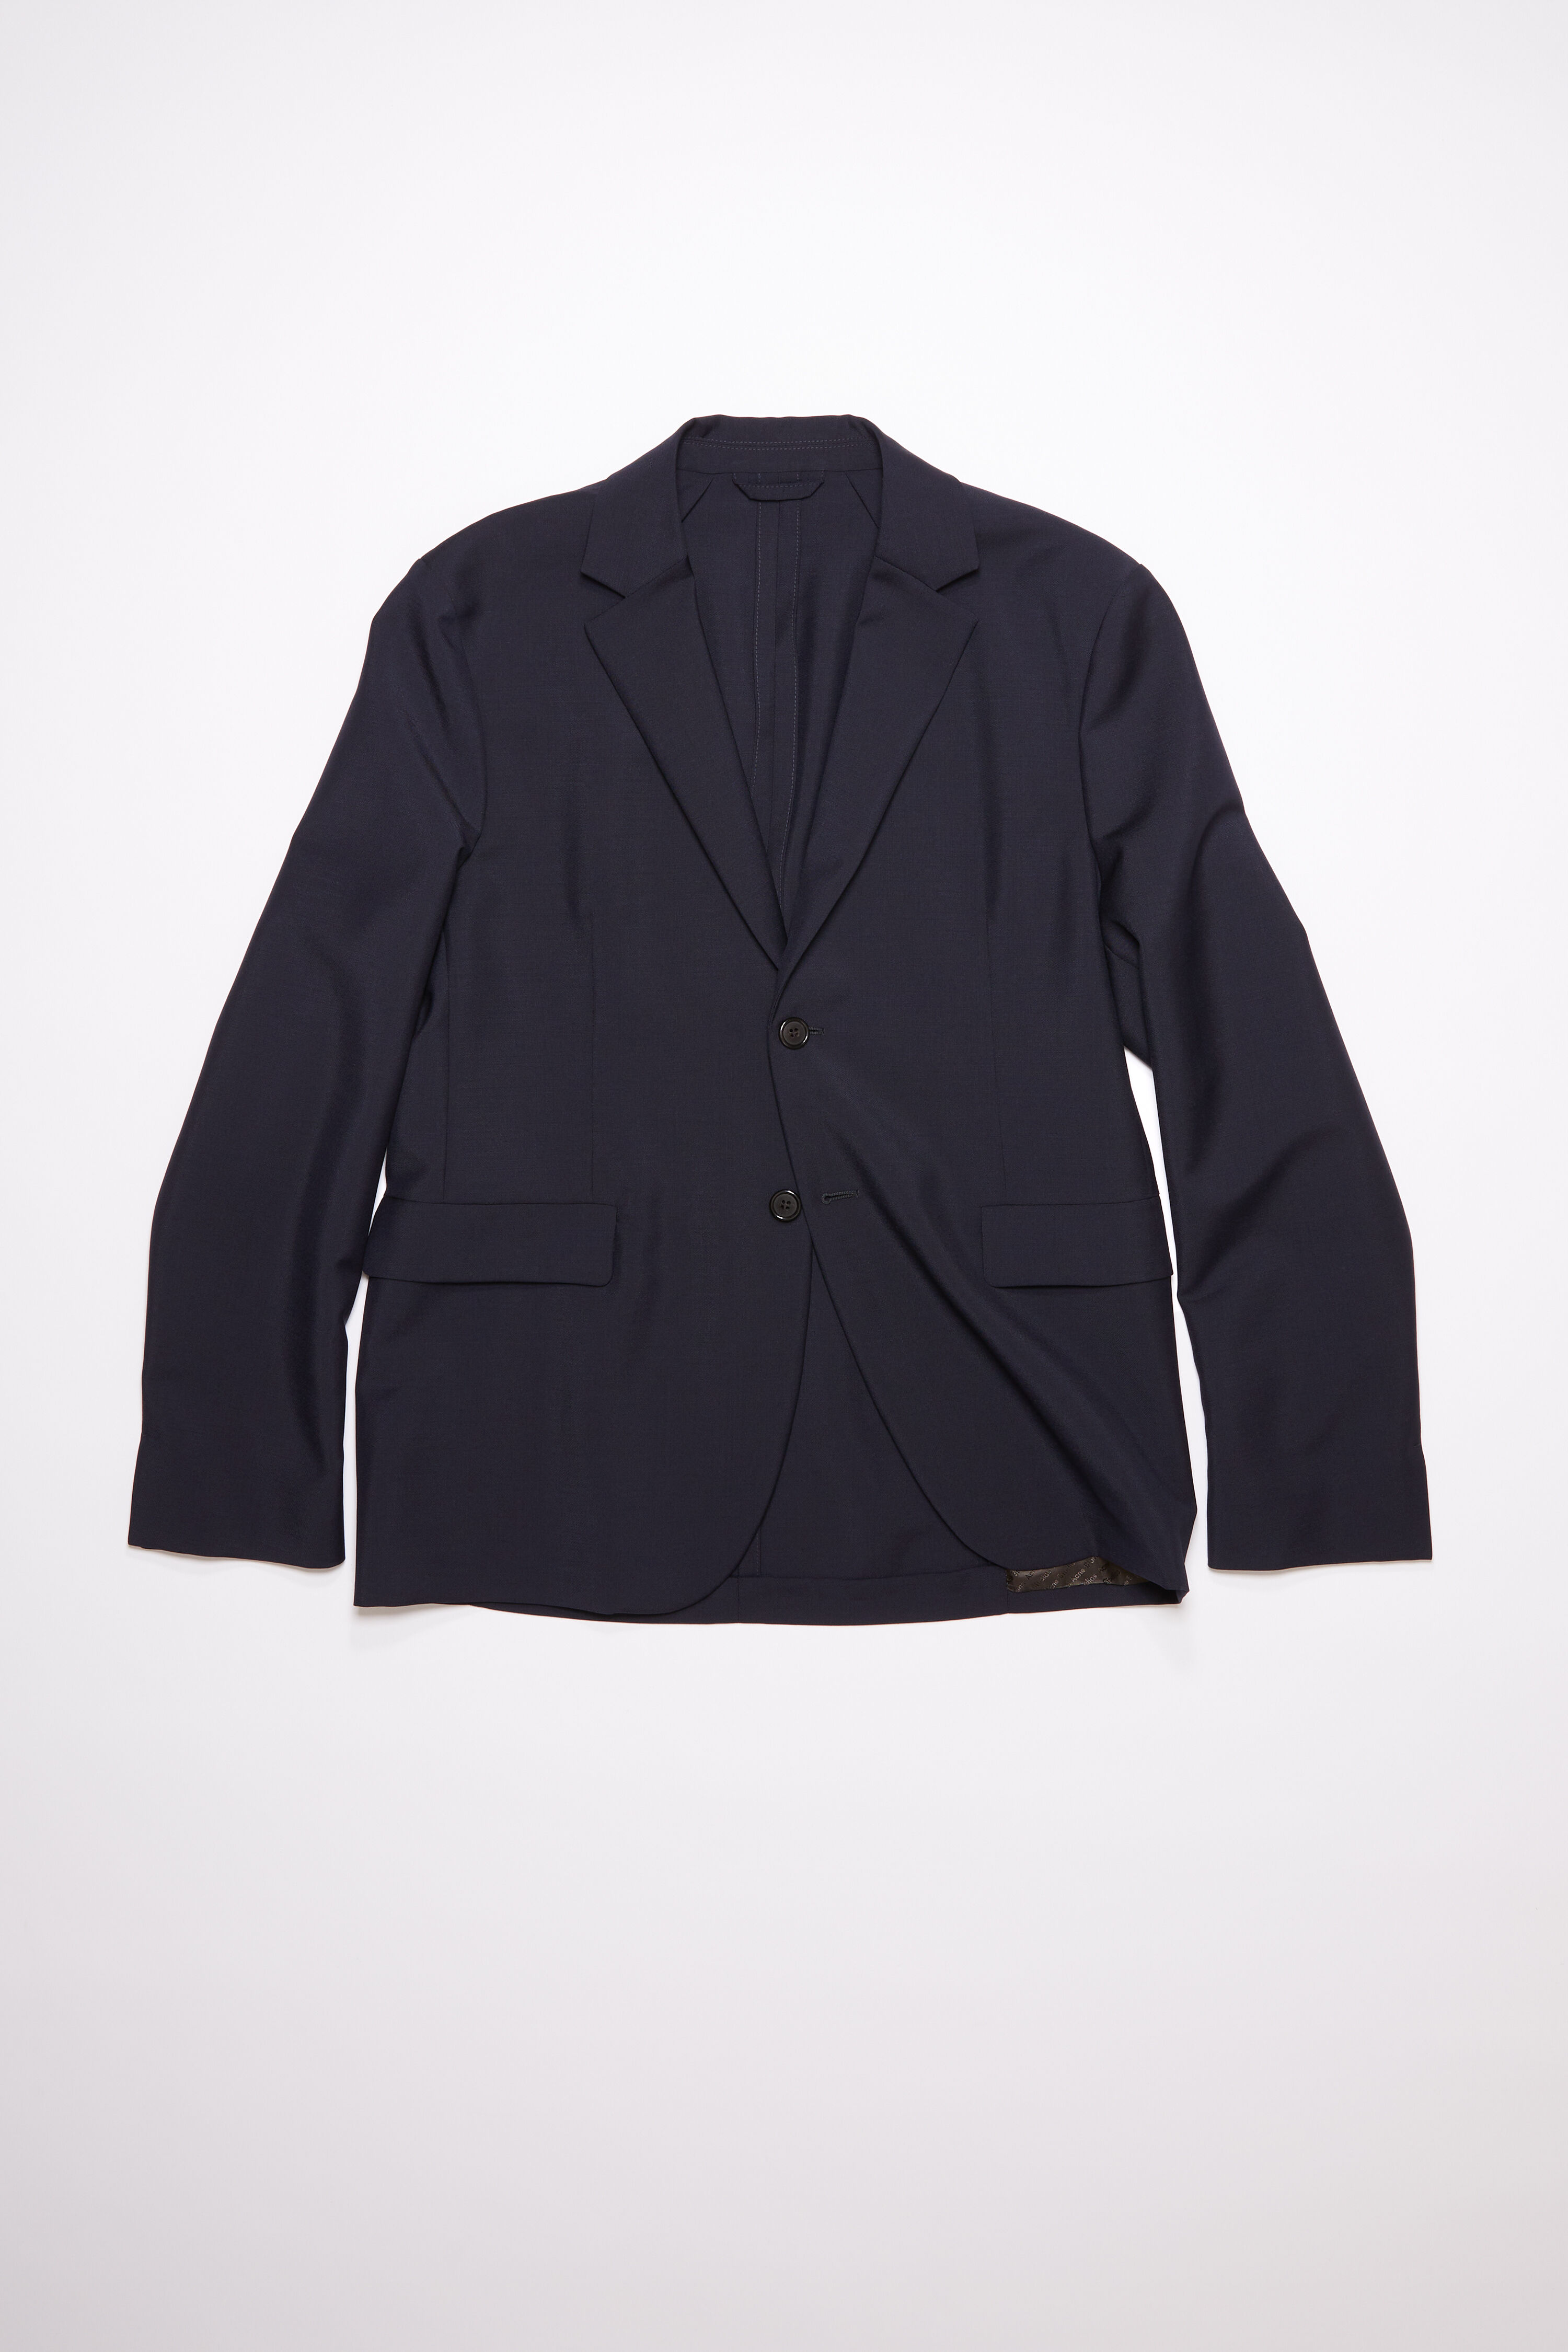 Acne Studios - Suit jacket - Navy